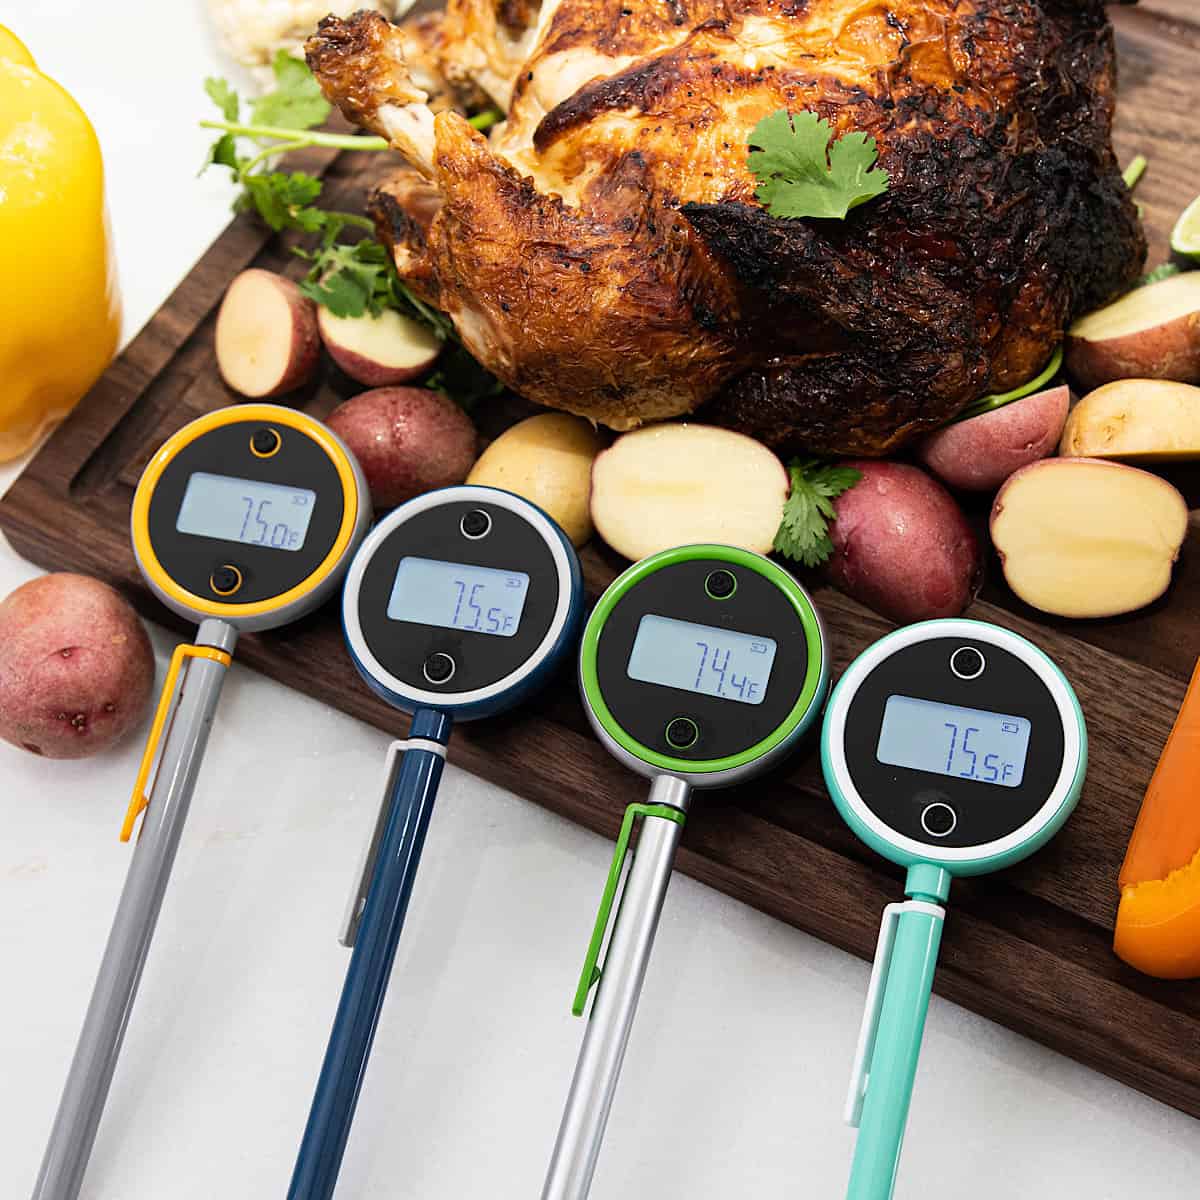 https://www.chefstemp.com/wp-content/uploads/2021/08/ChefsTemp-Pocket-Pro-Digital-Thermometer.jpg